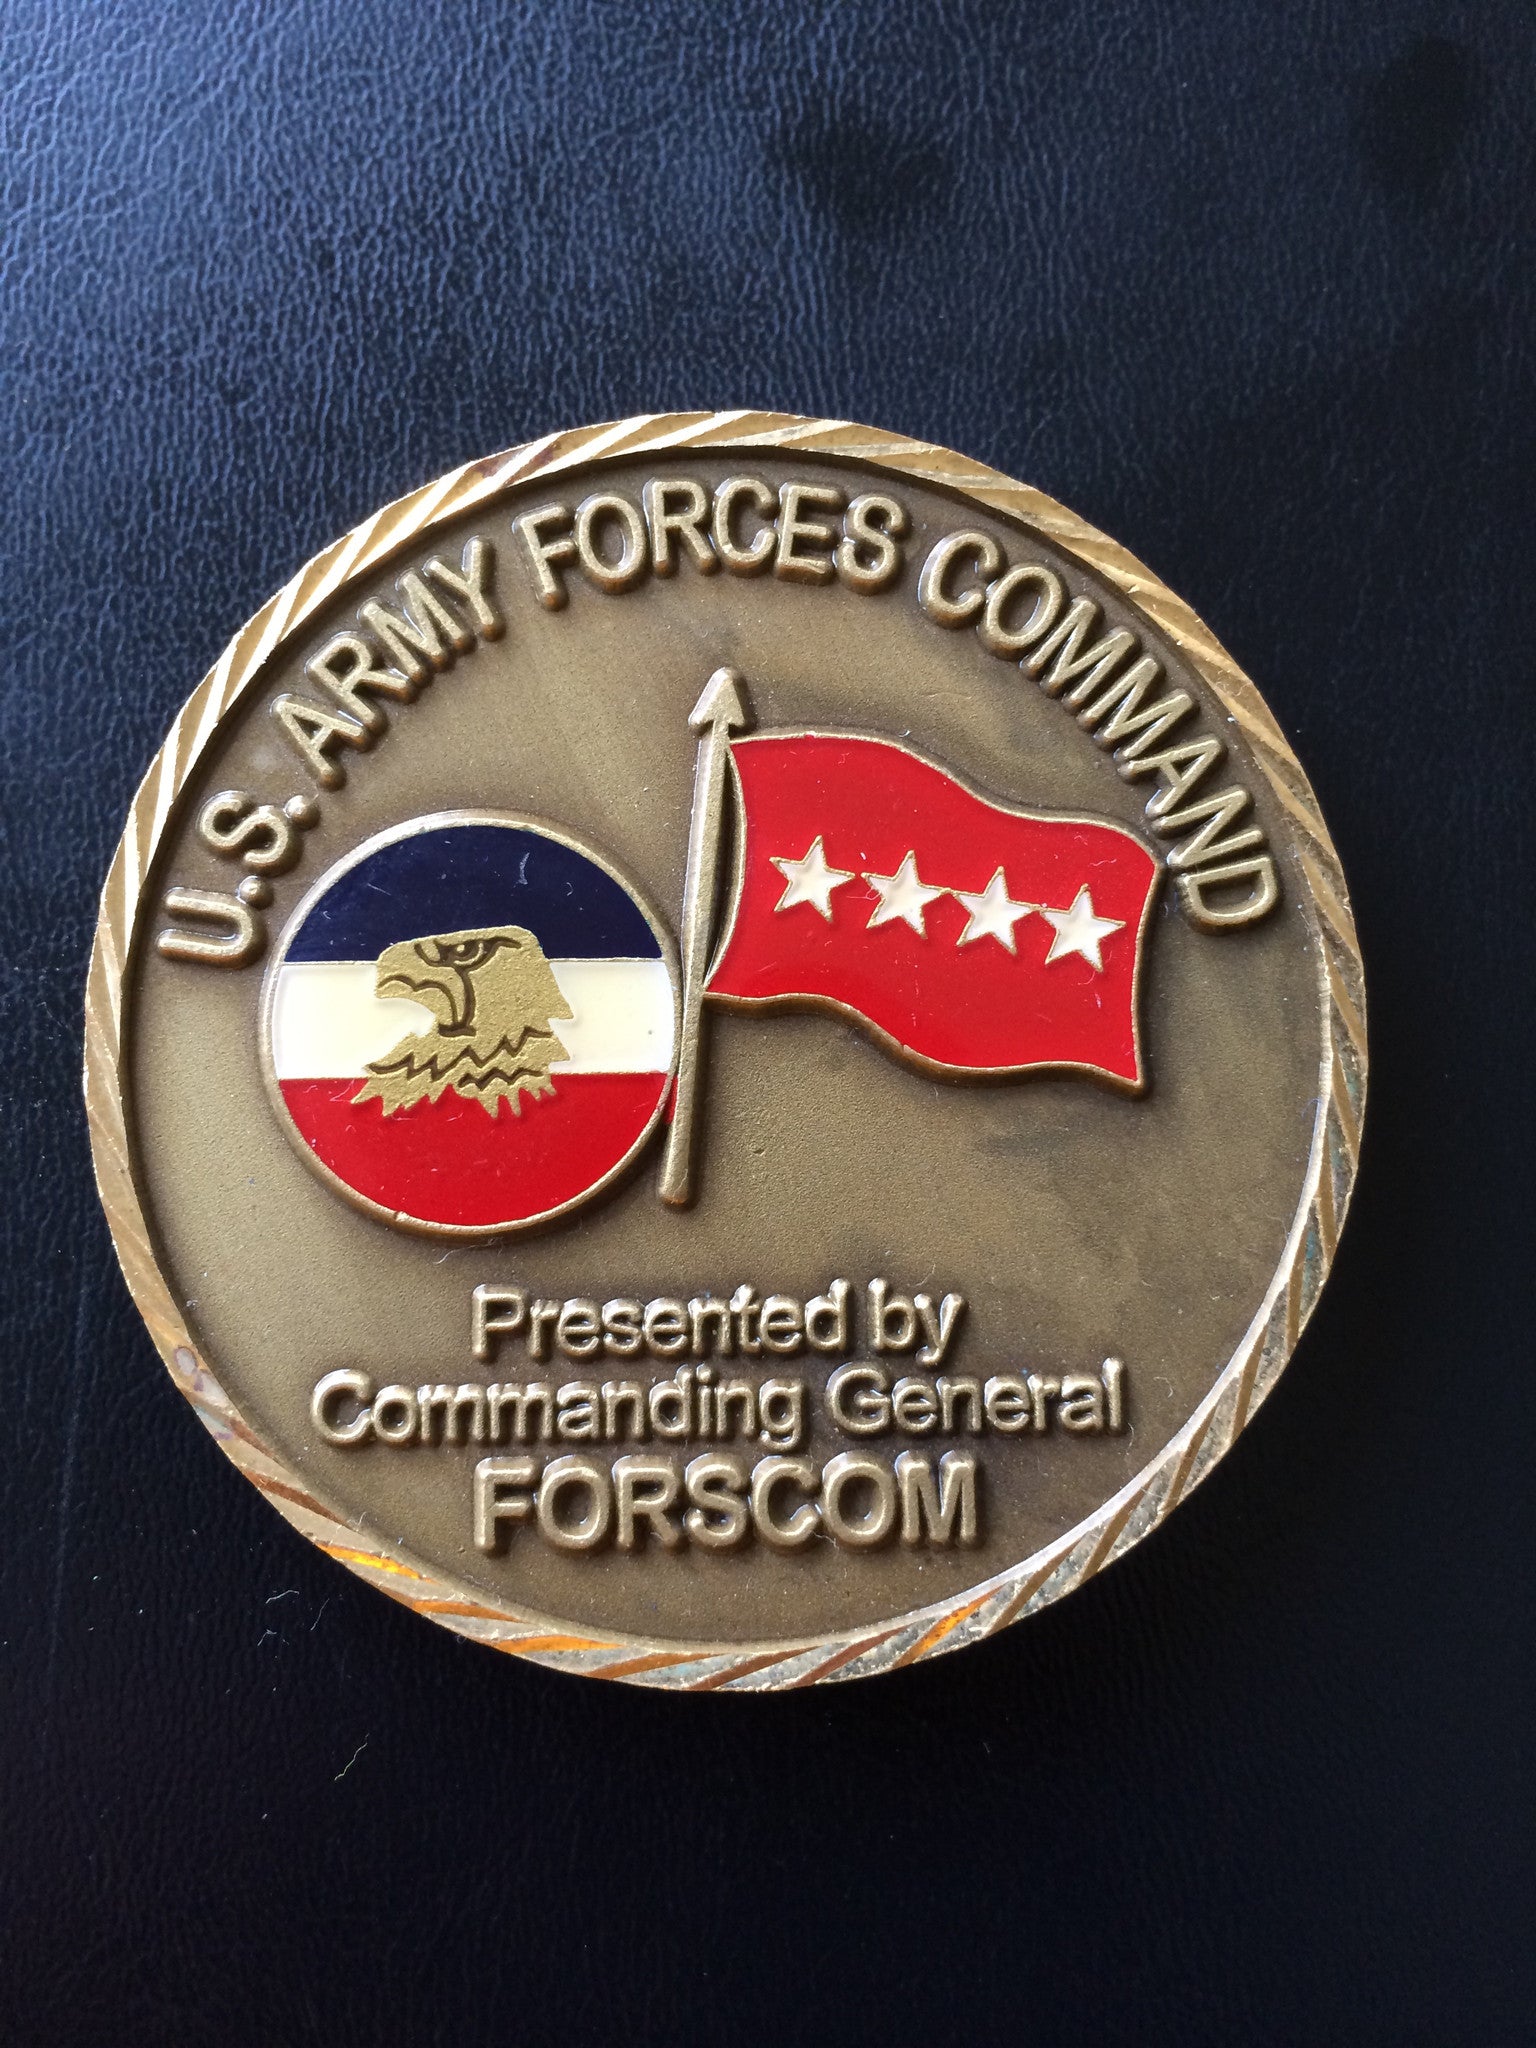 FORSCOM Commanding General (15th) General Larry R. Ellis